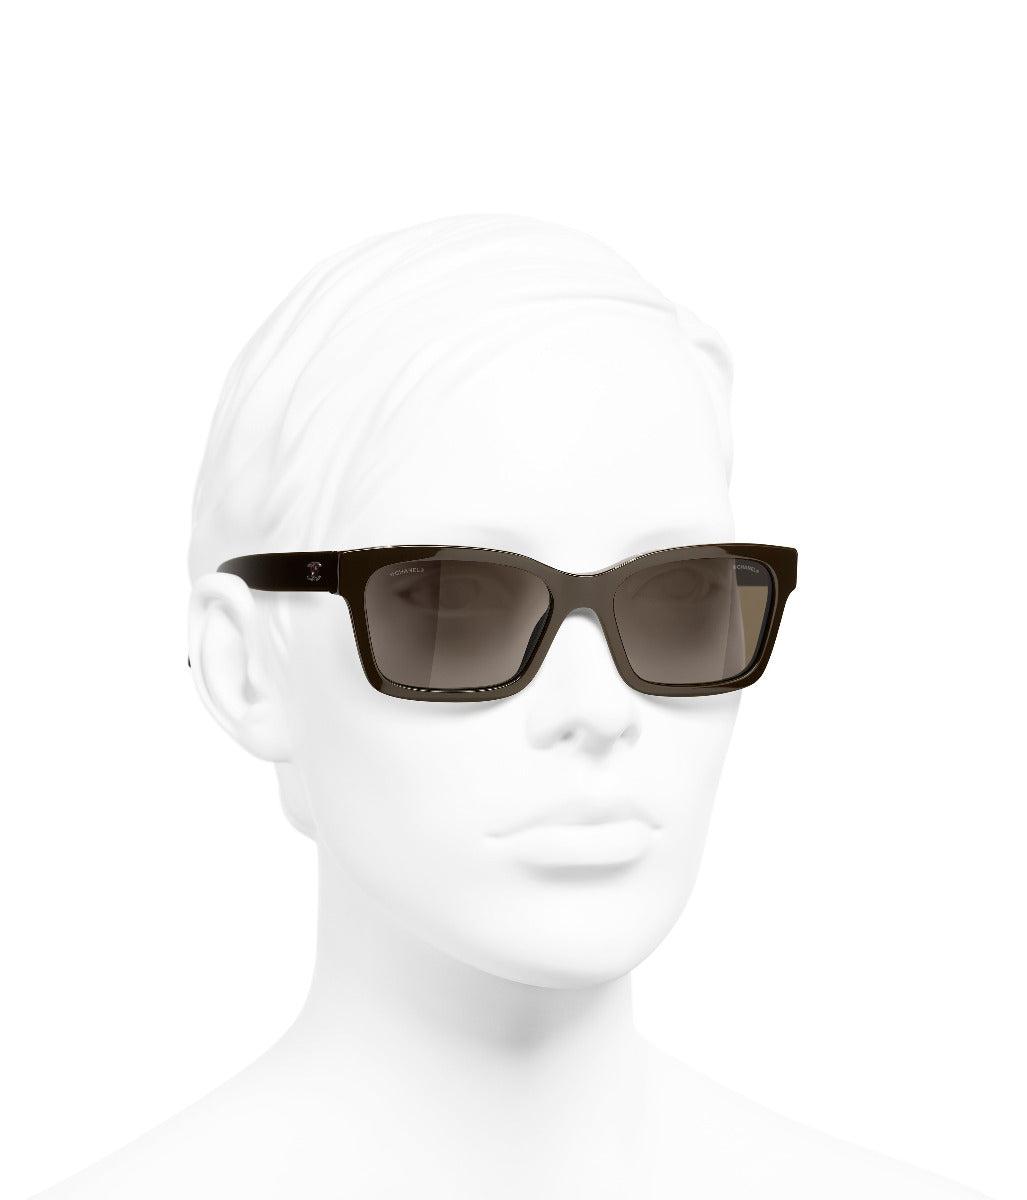 Chanel - Square Sunglasses - Burgundy Gradient - Chanel Eyewear - Avvenice